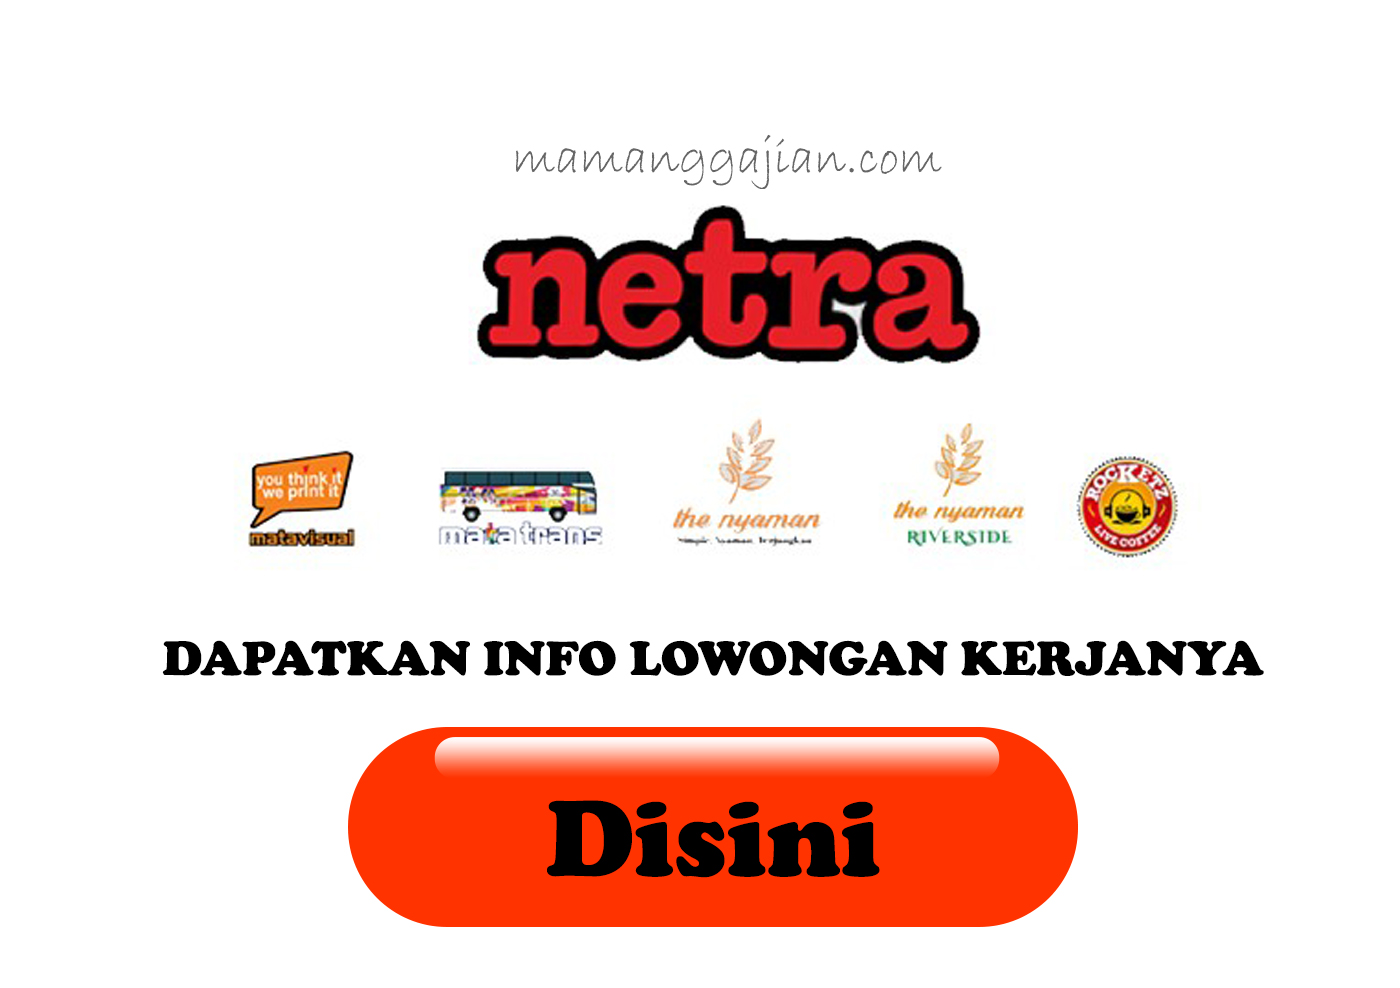 Gaji dan Lowongan Netra Group Terbaru